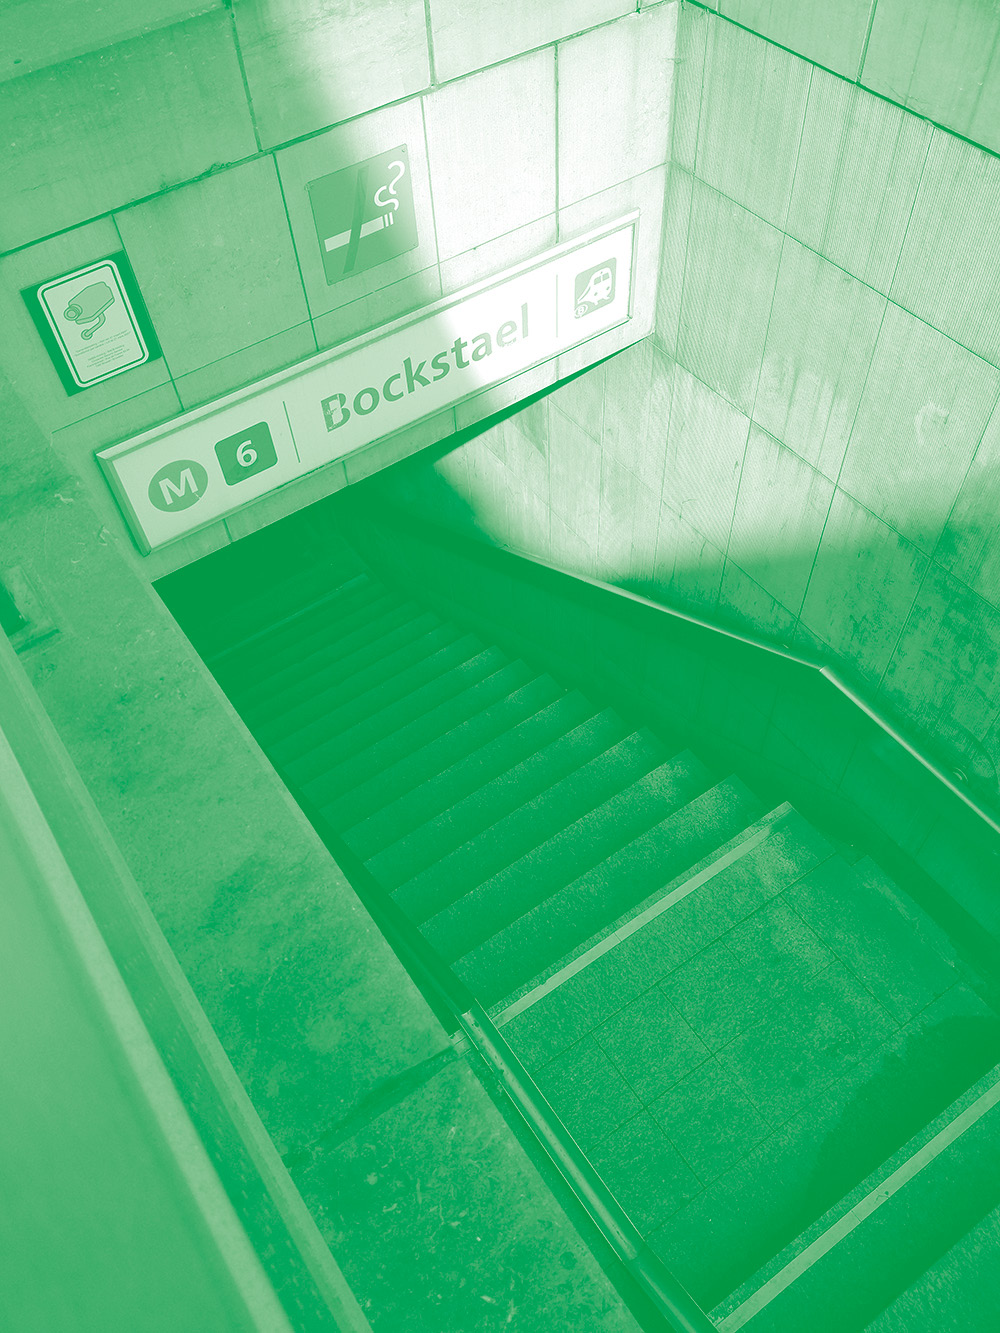 Metro Bockstael